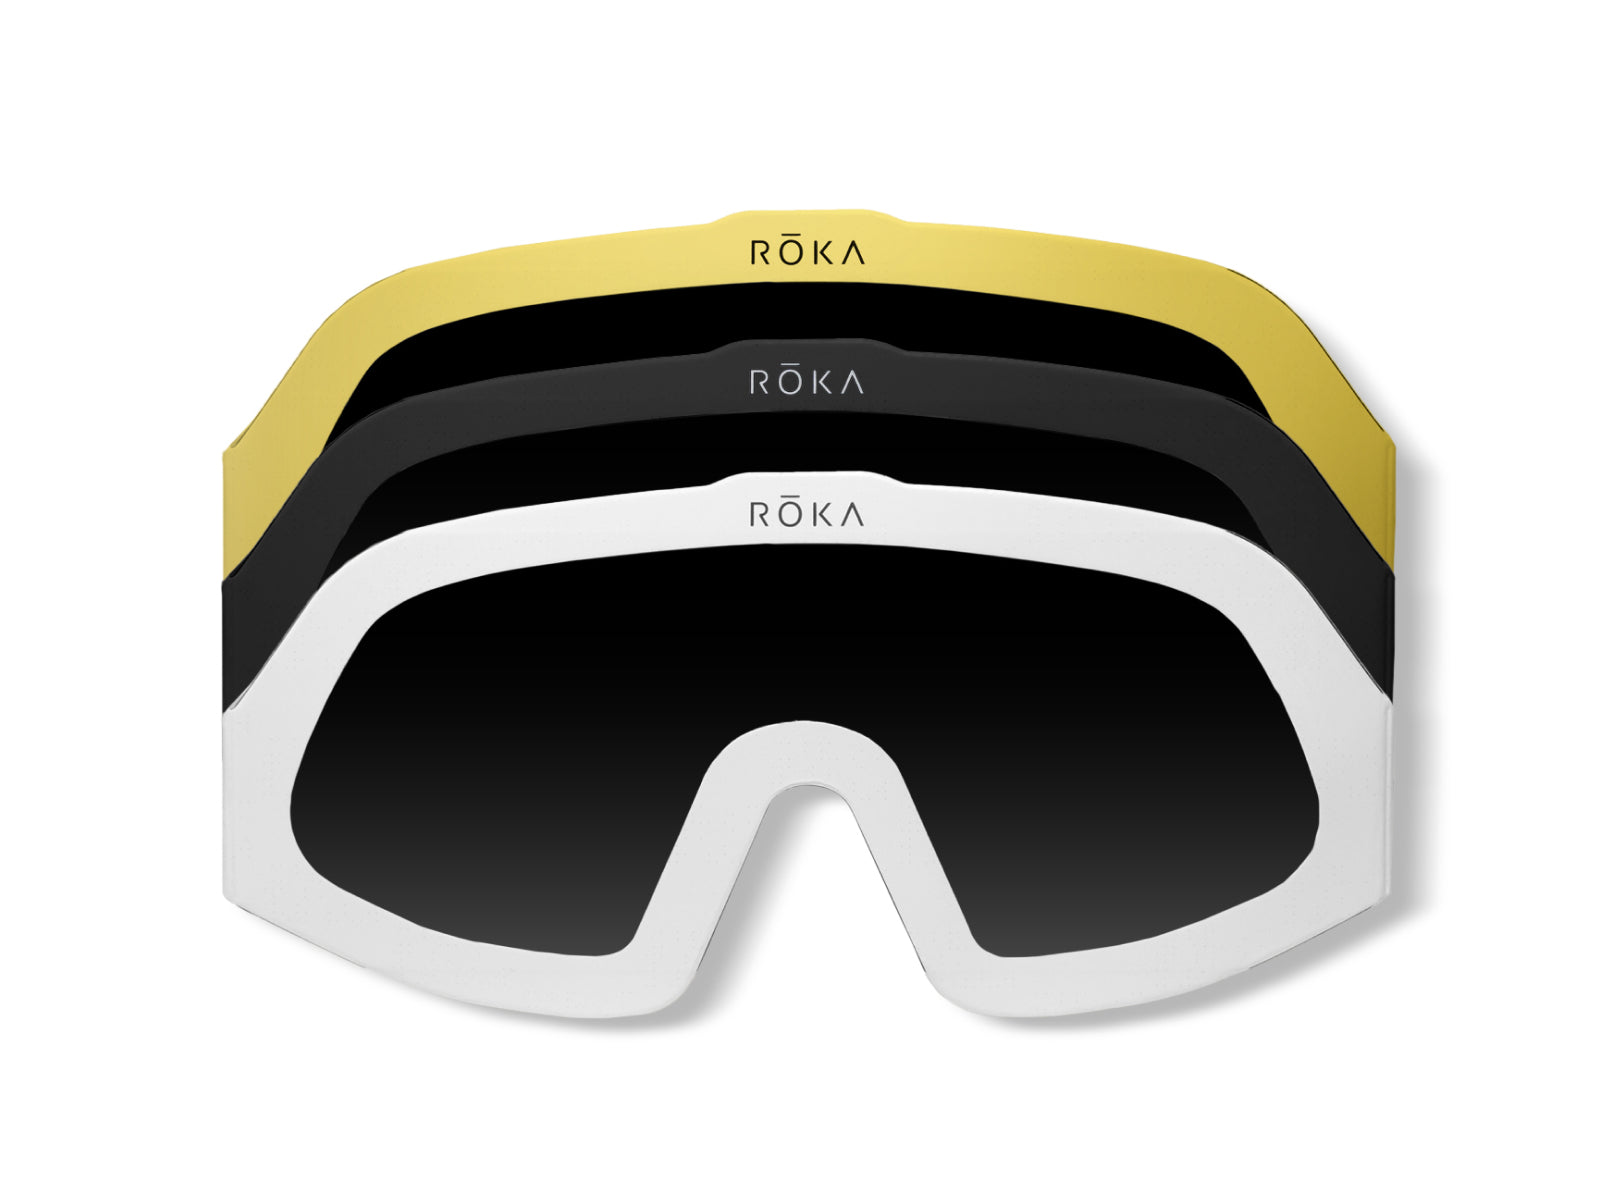 Review: Roka Matador Ultralight Performance Sunglasses